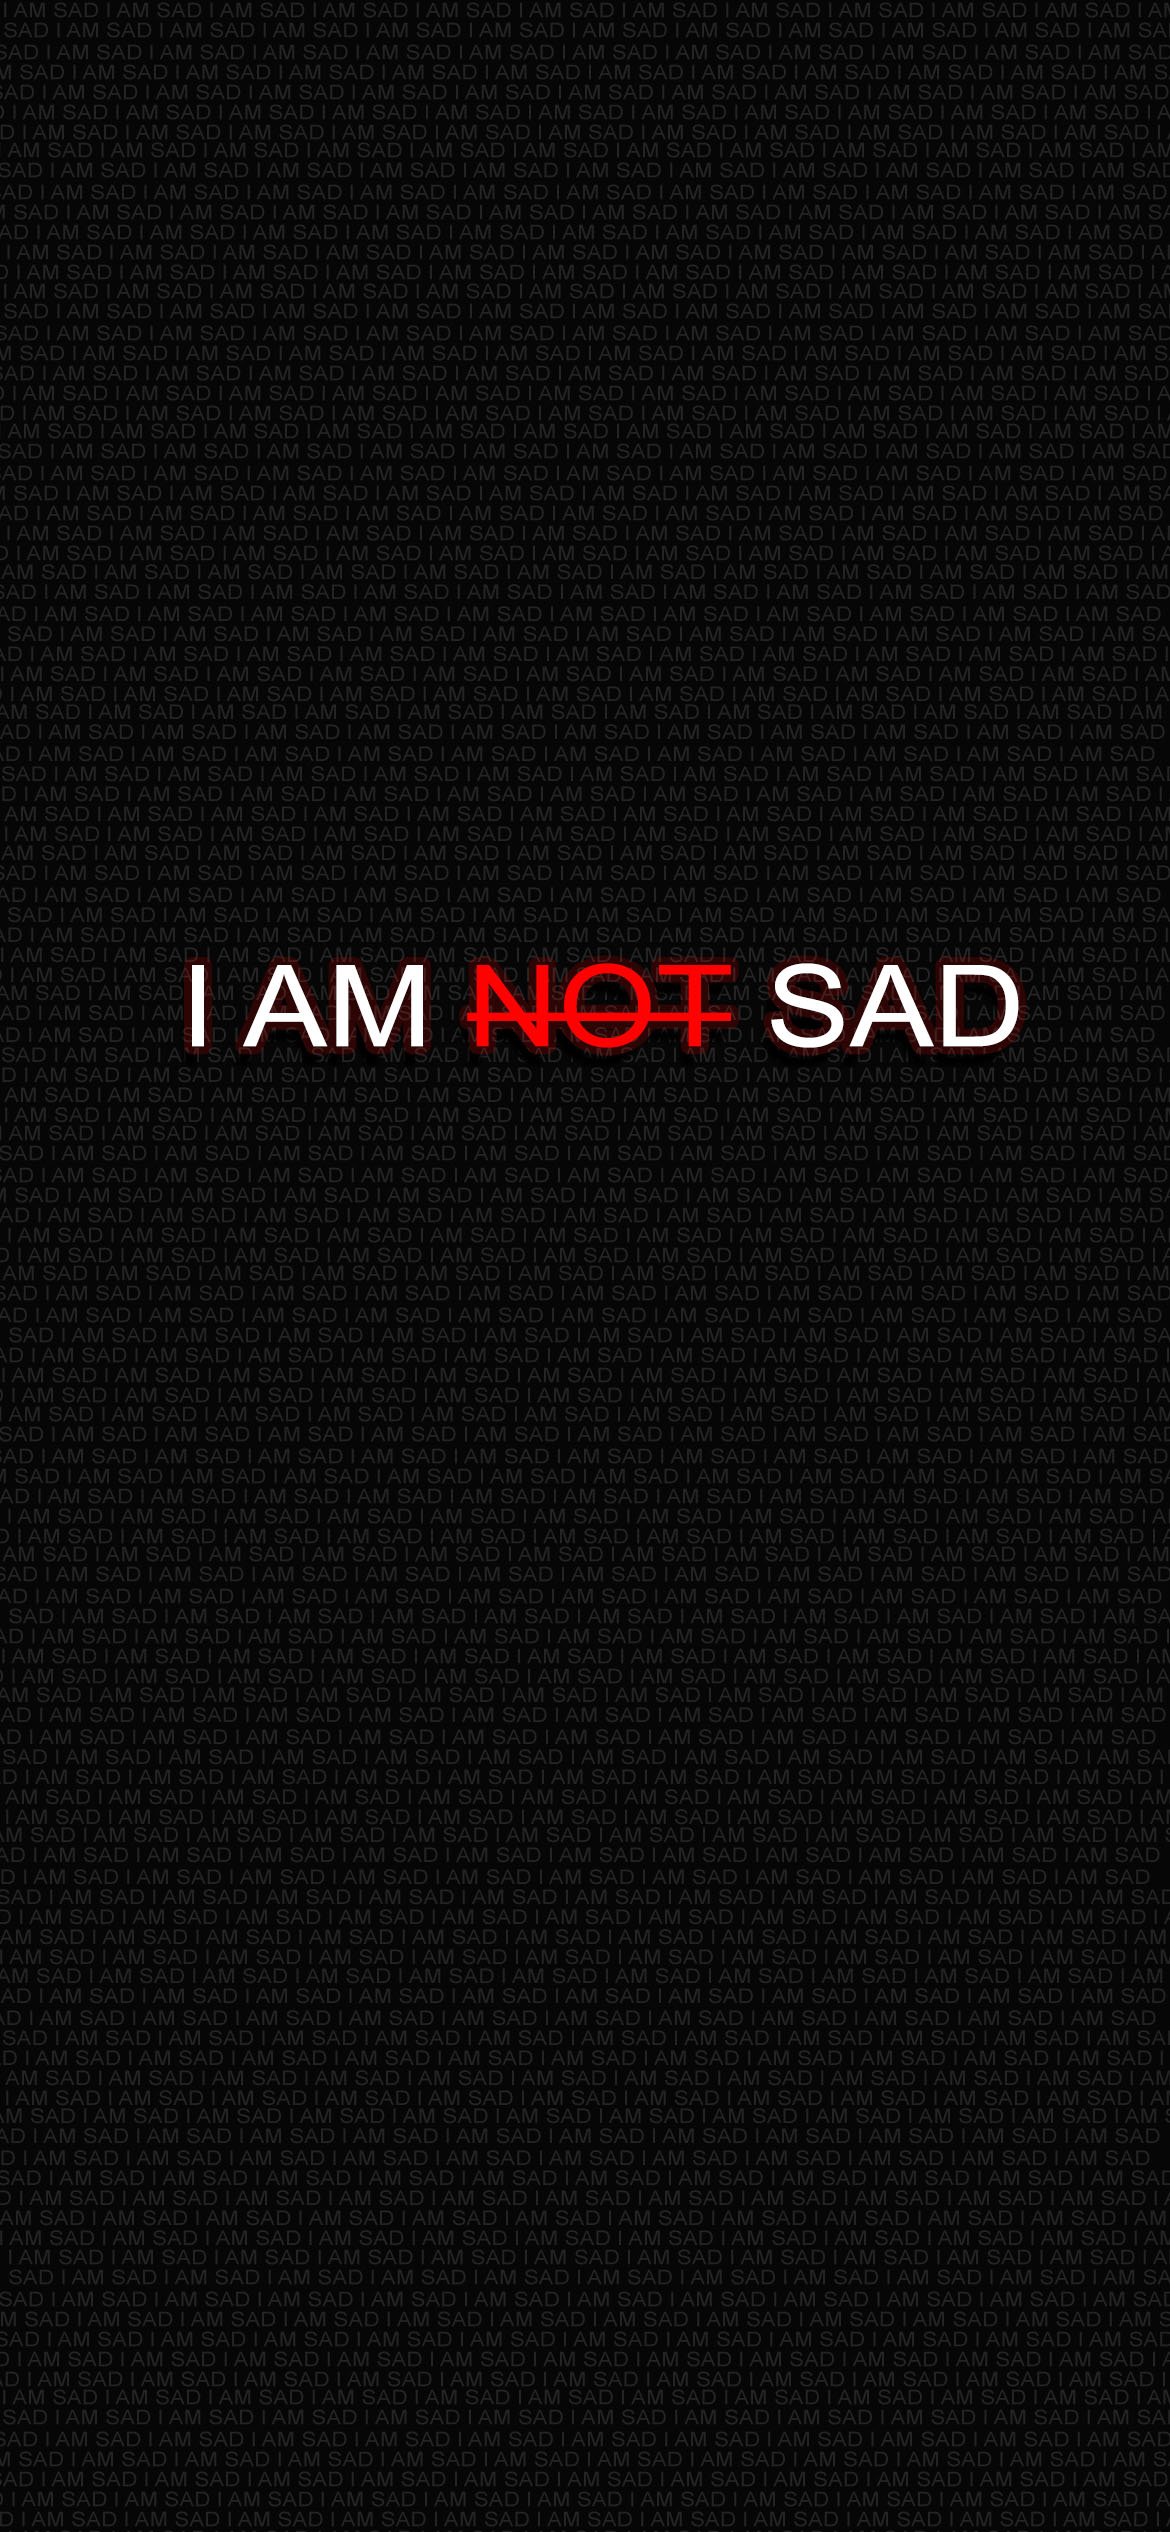 I am not sad